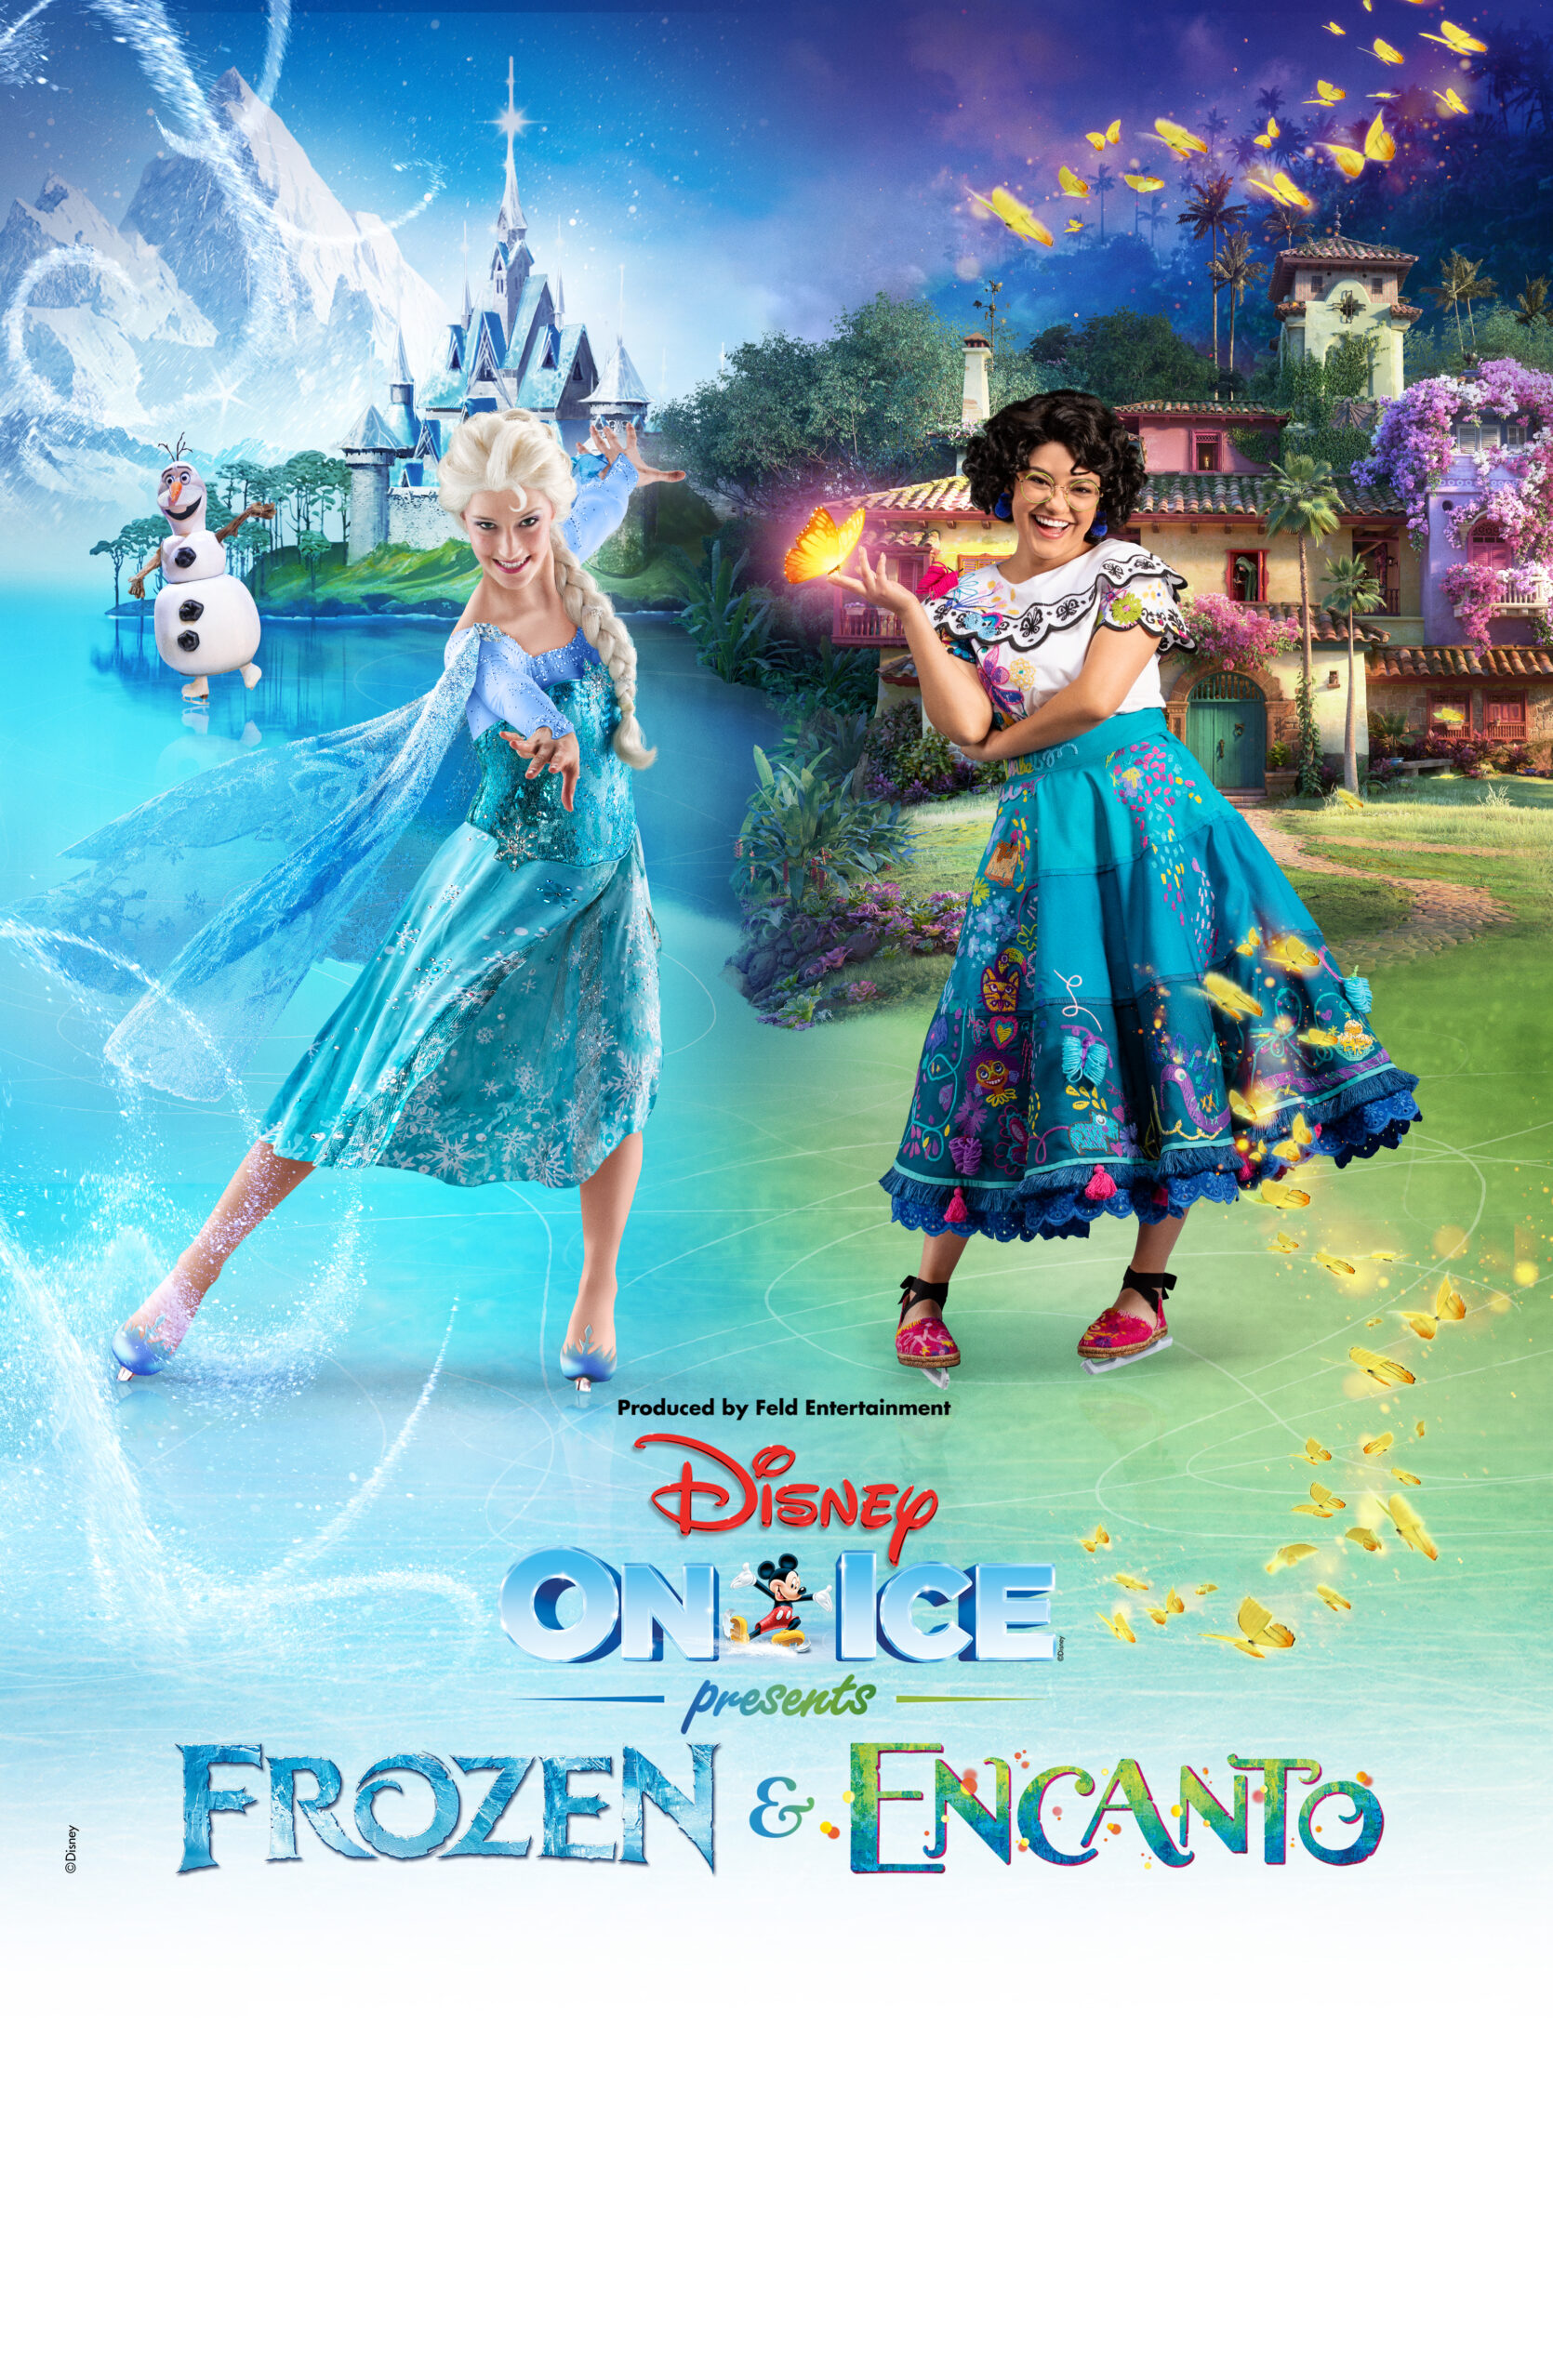 Disney On Ice Presents Frozen and Encanto! • Happy Family Blog